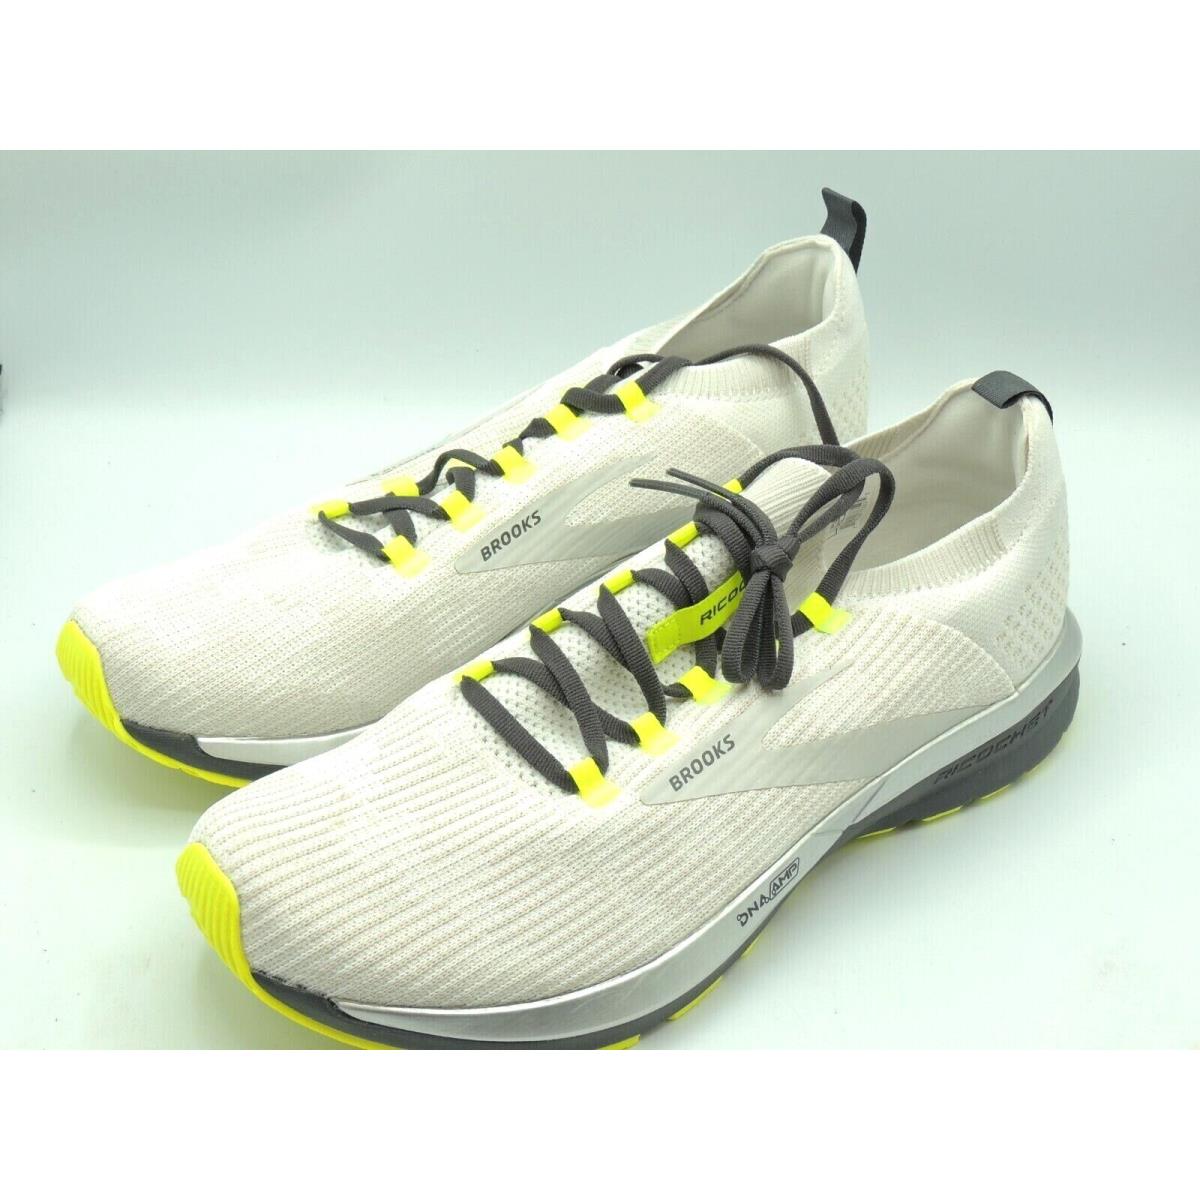 Brooks Ricochet 2 White Black Nightlife Running Shoes Sneakers Mens 11.5